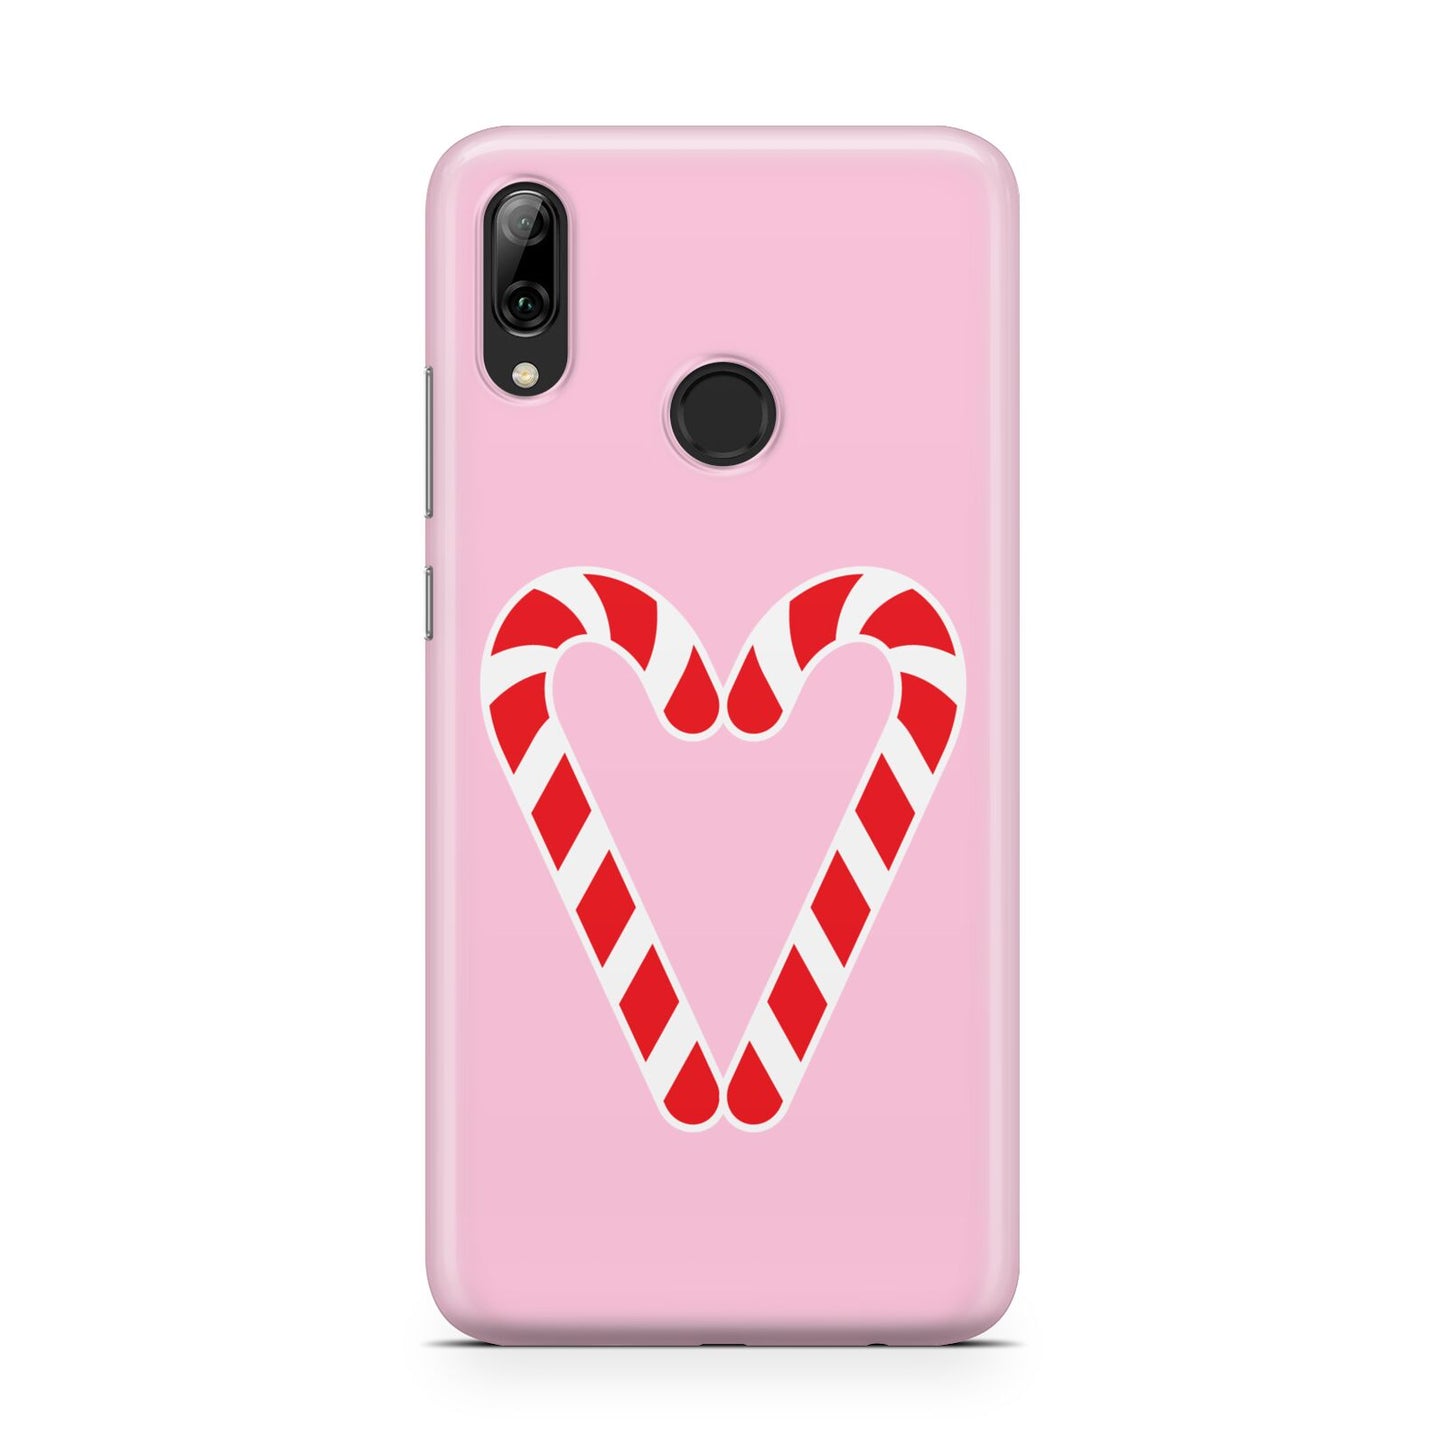 Candy Cane Heart Huawei Y7 2019